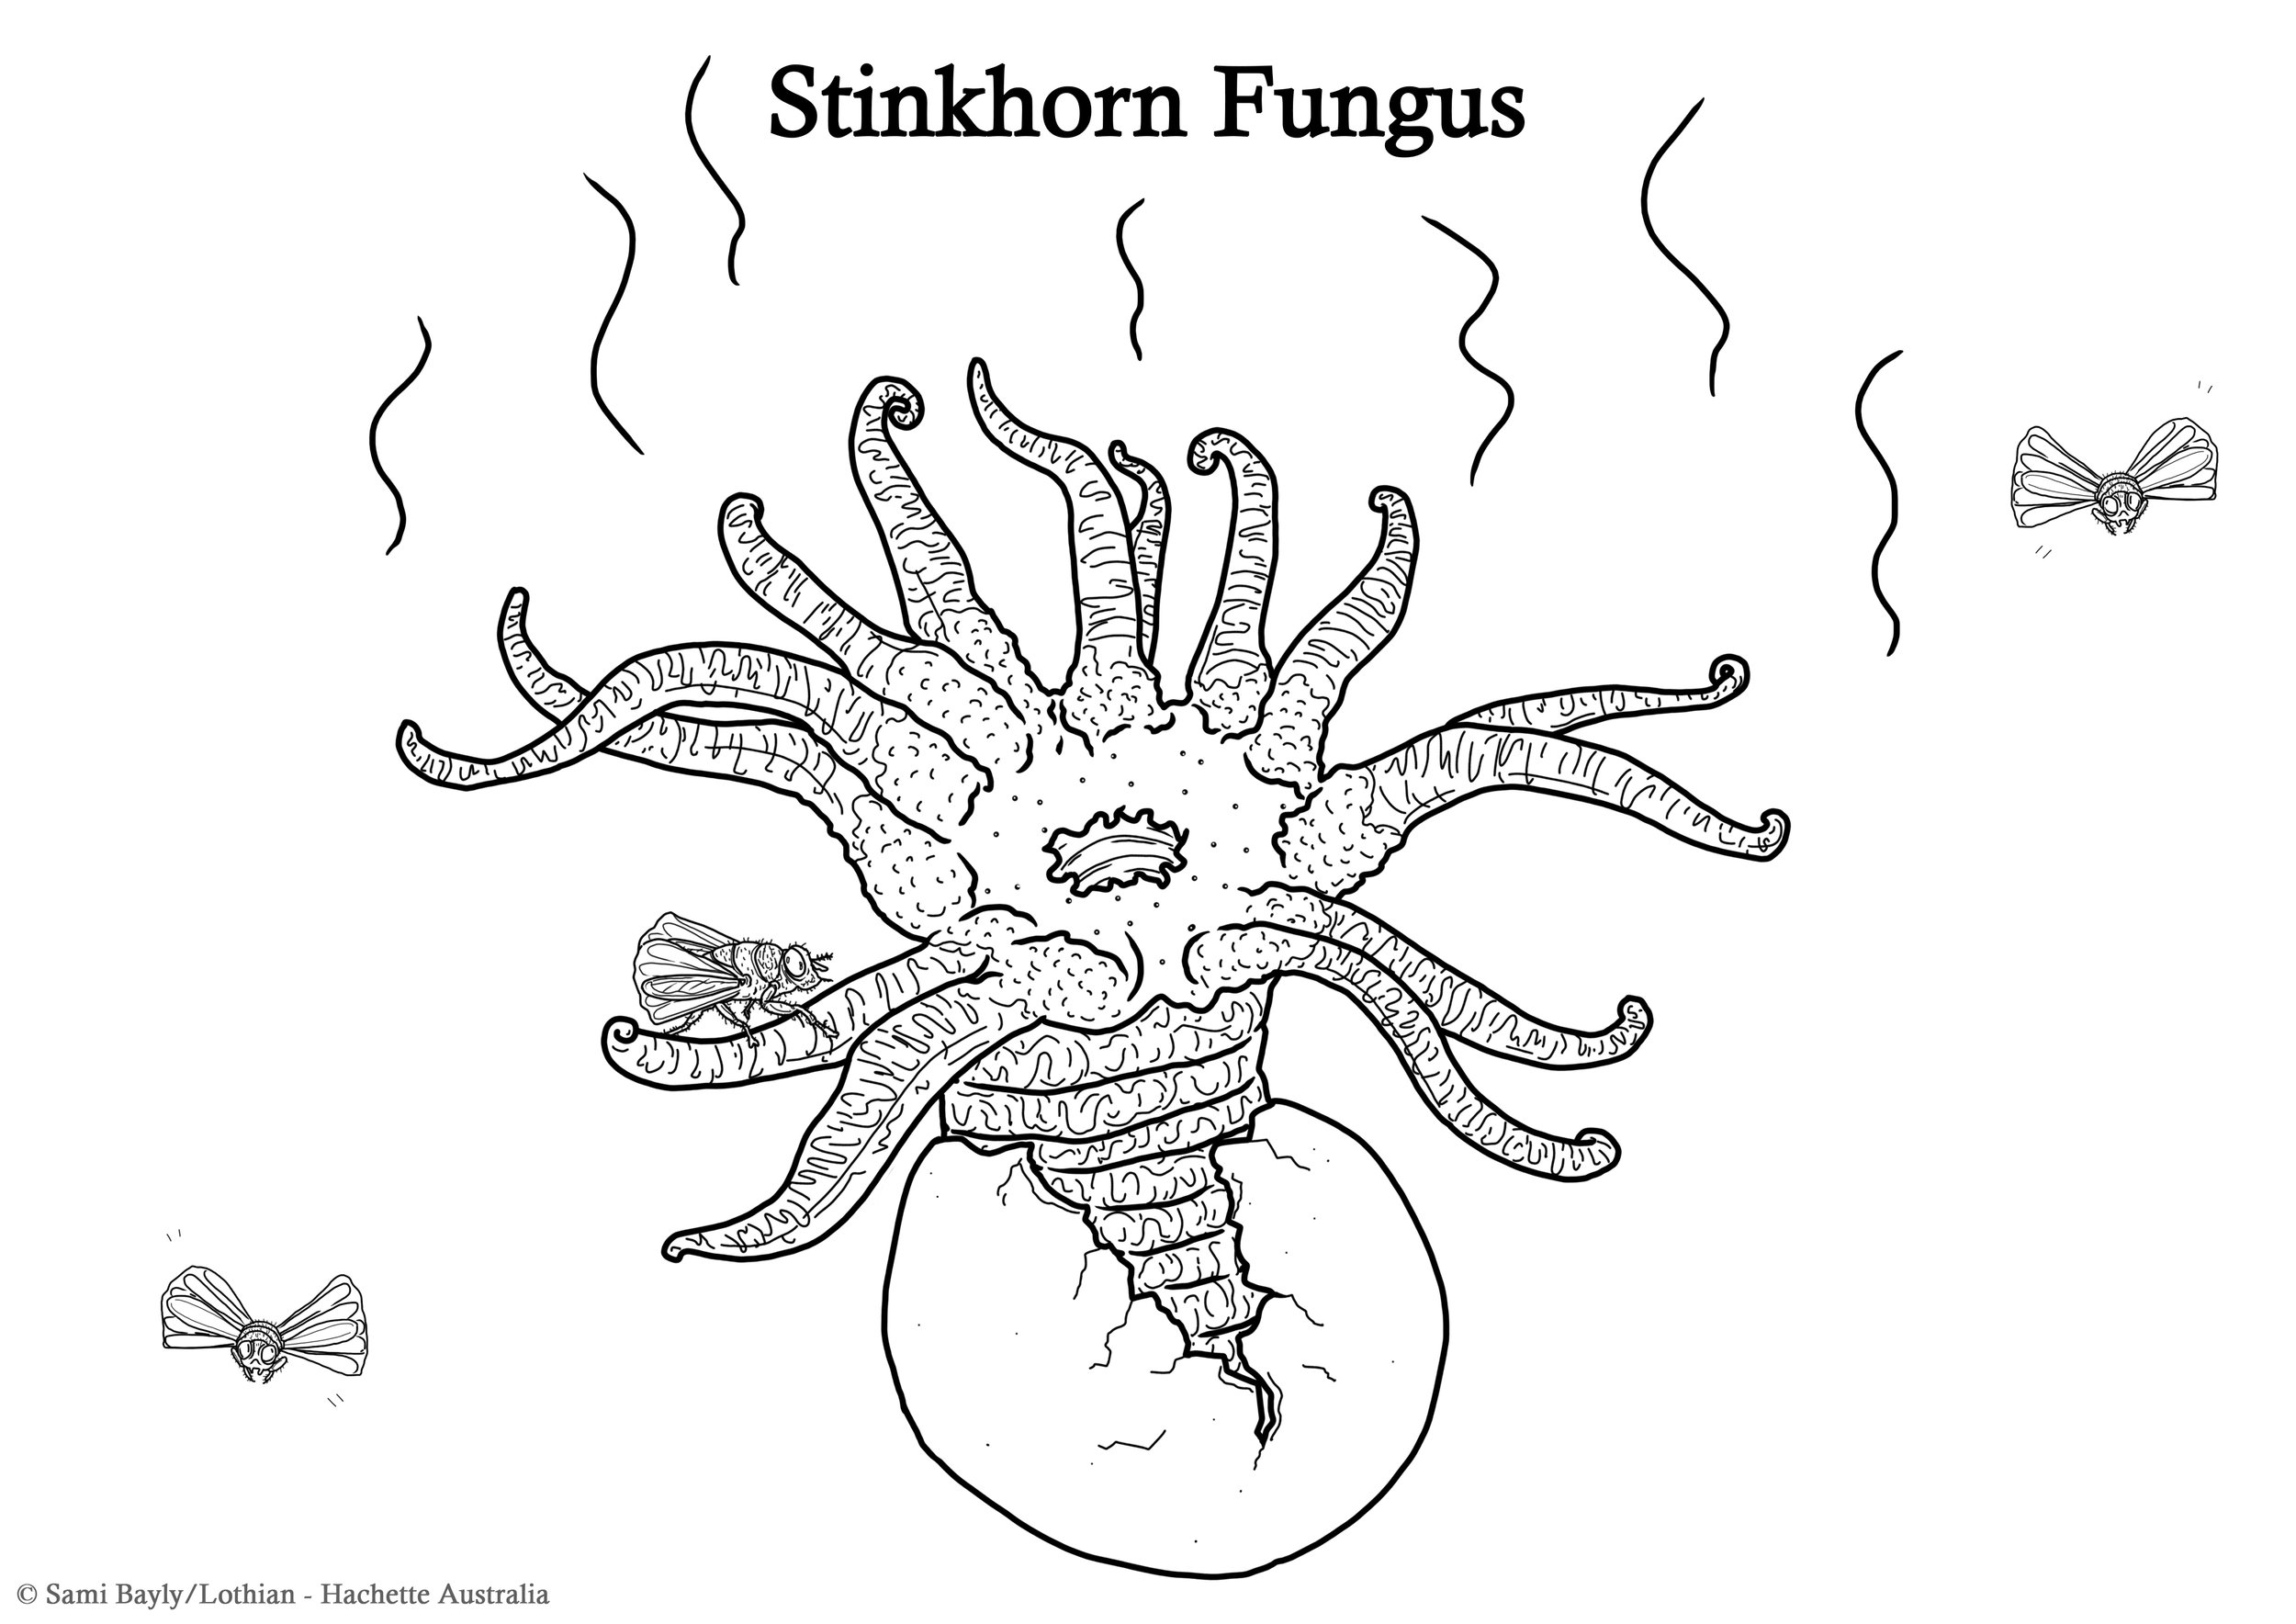 Stinkhorn Fungus Line Drawing.jpg